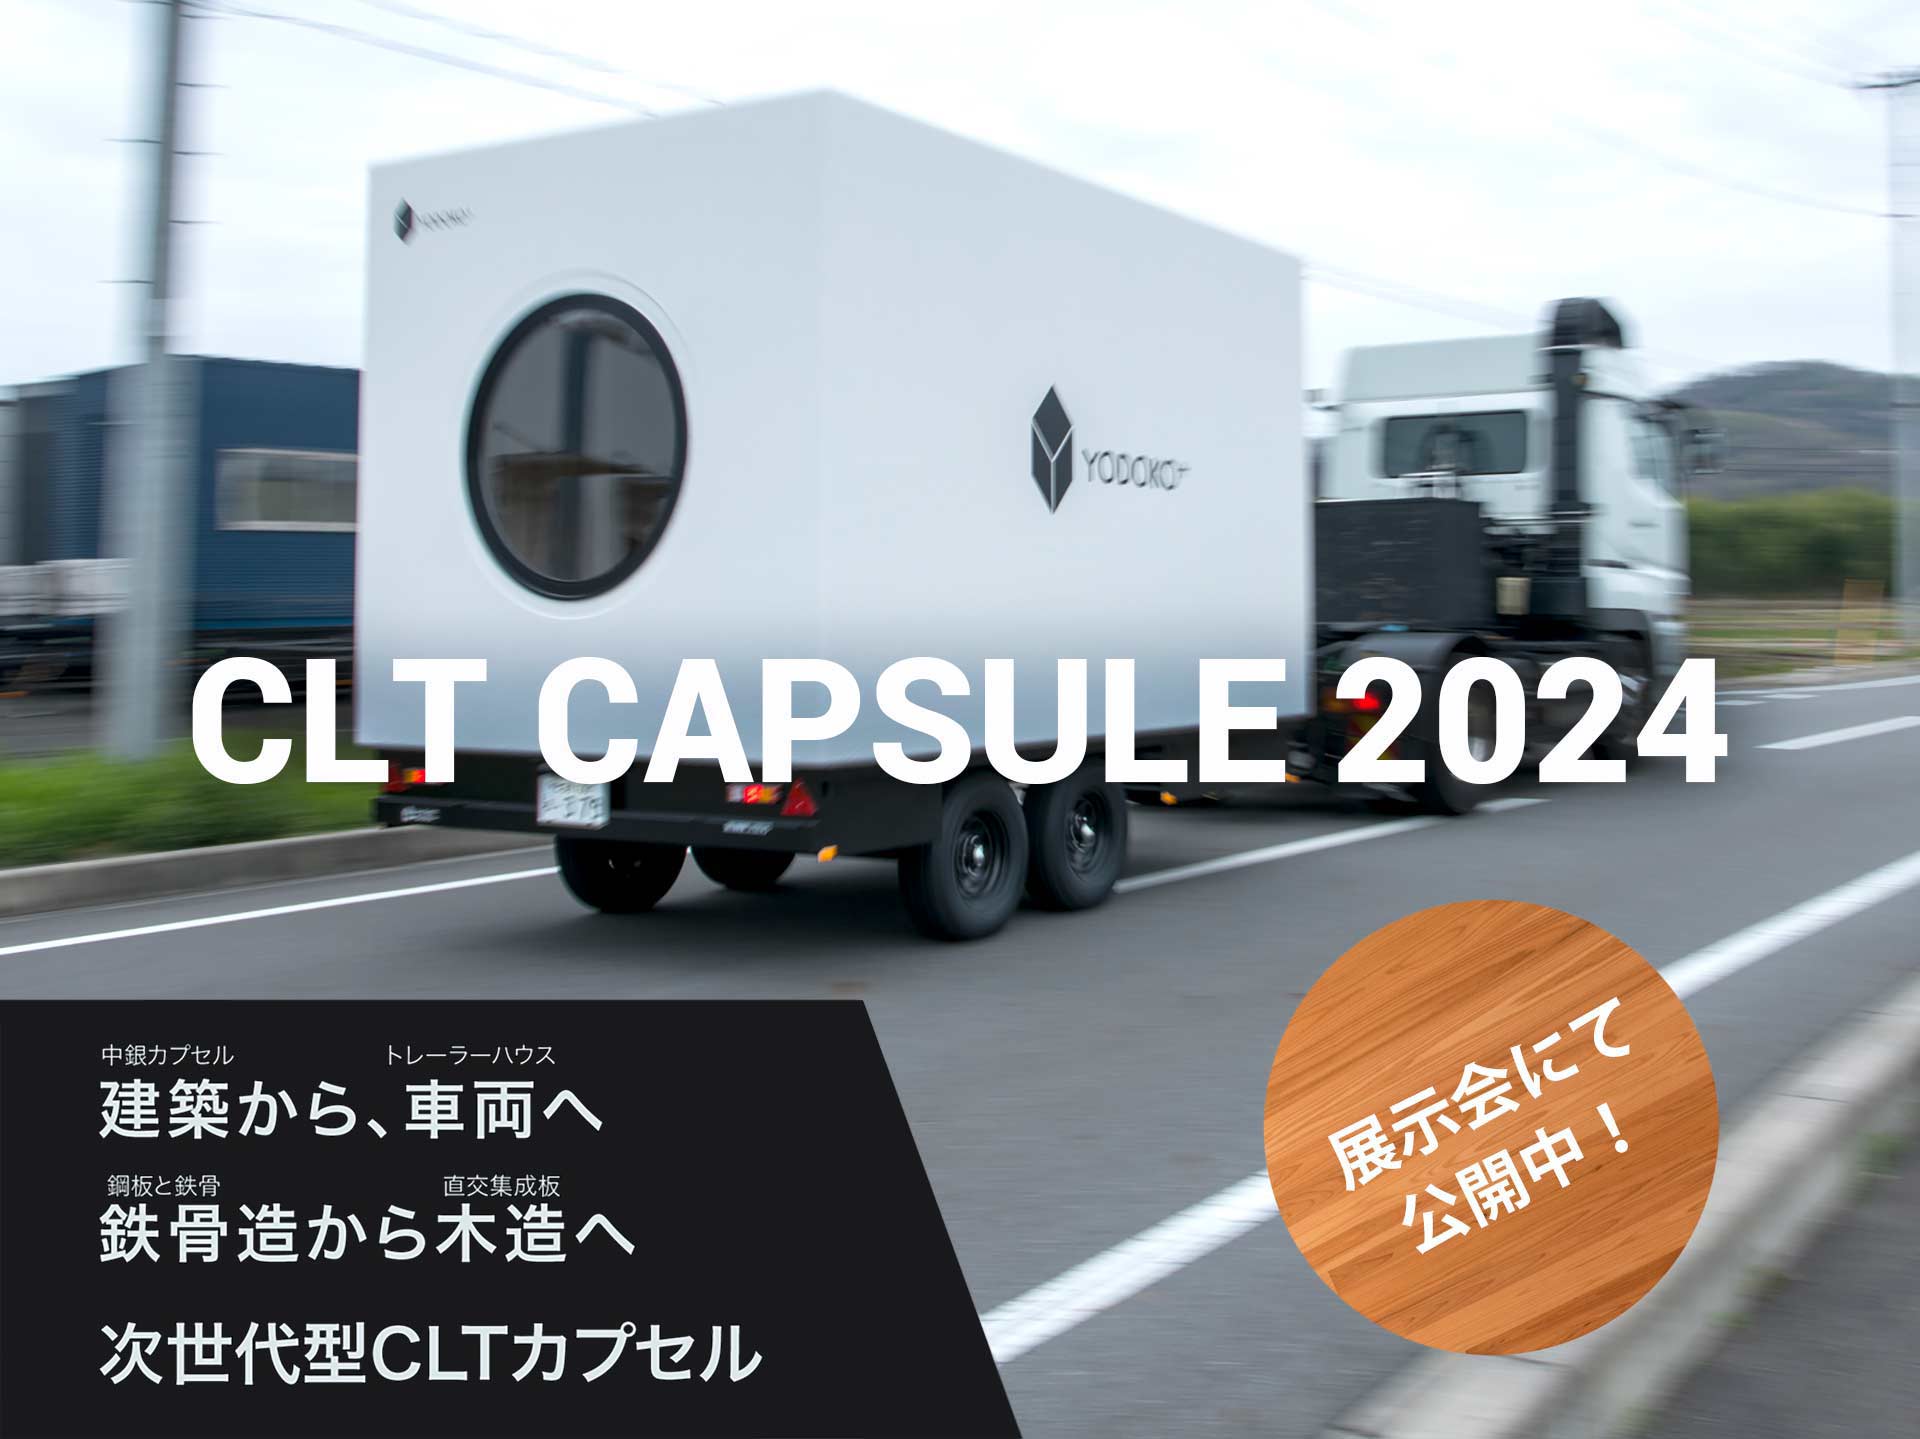 CLT CAPSULE 2024 建築（中銀カプセル）から、車両（トレーラーハウス）へ 鉄骨造（鋼板と鉄骨）から木造（直交集成板）へ 次世代型CLTカプセル